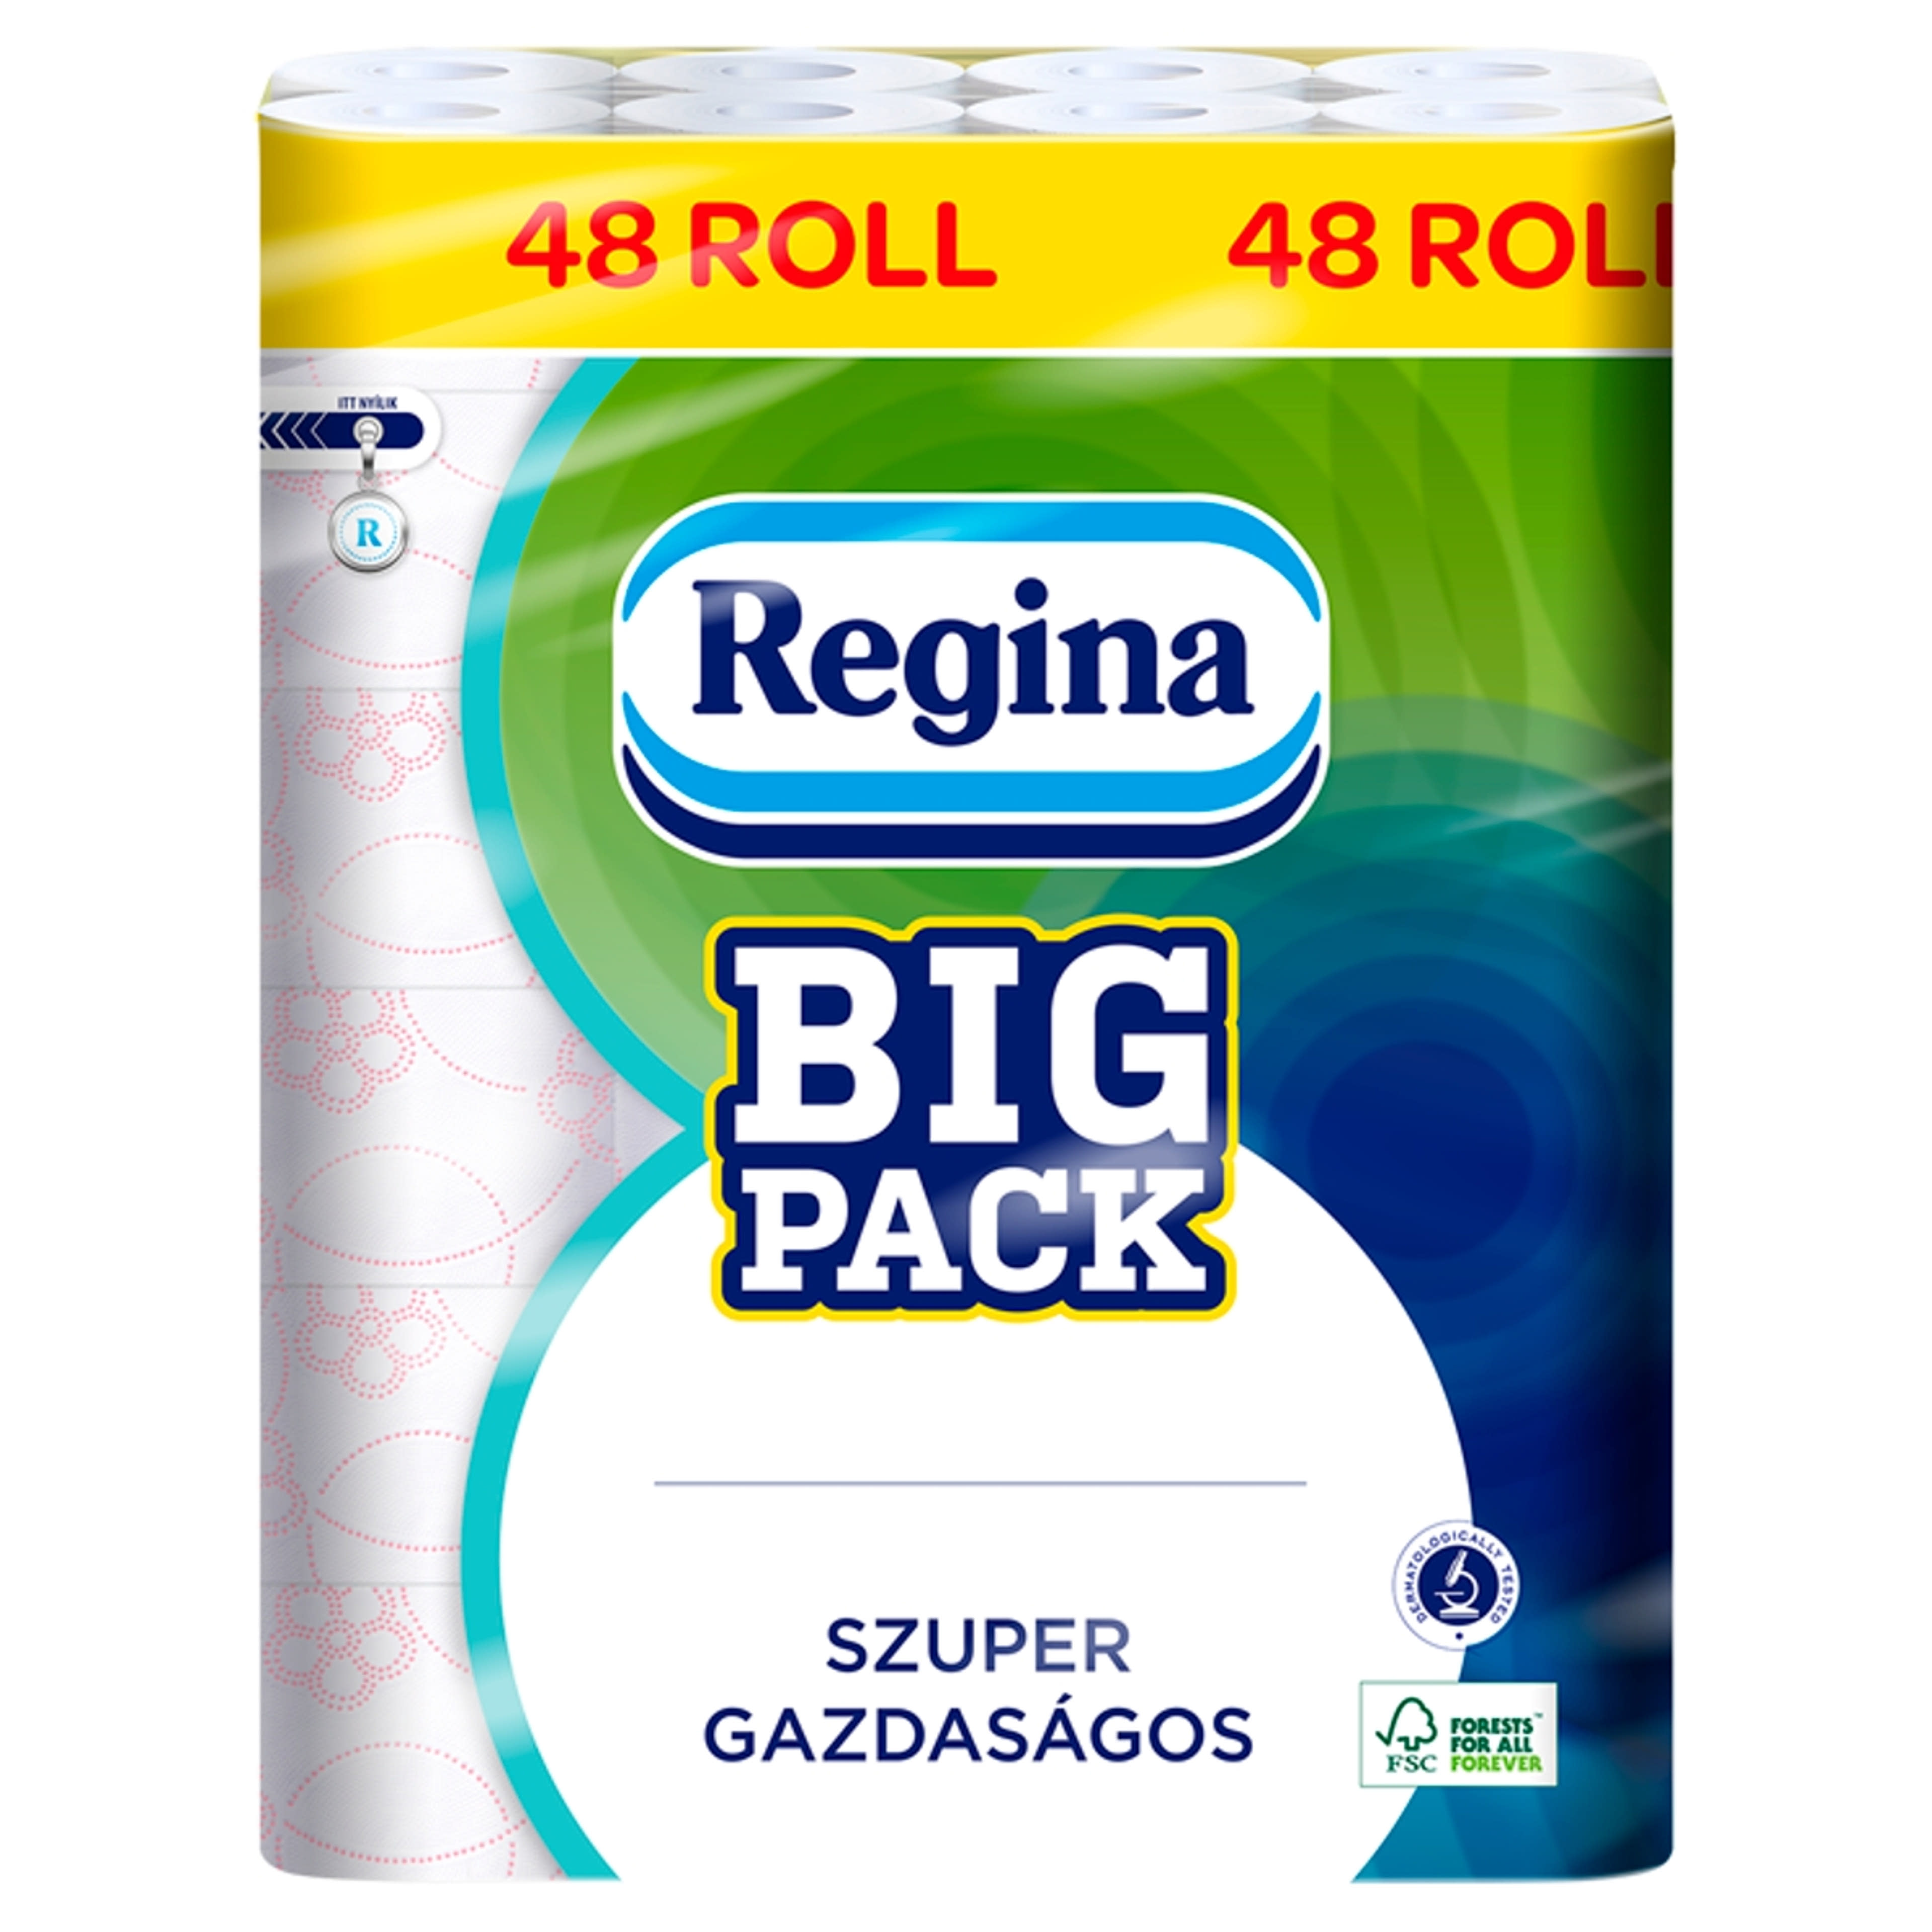 Regina Big Pack toalett papír 2 rétegű - 48 db-1